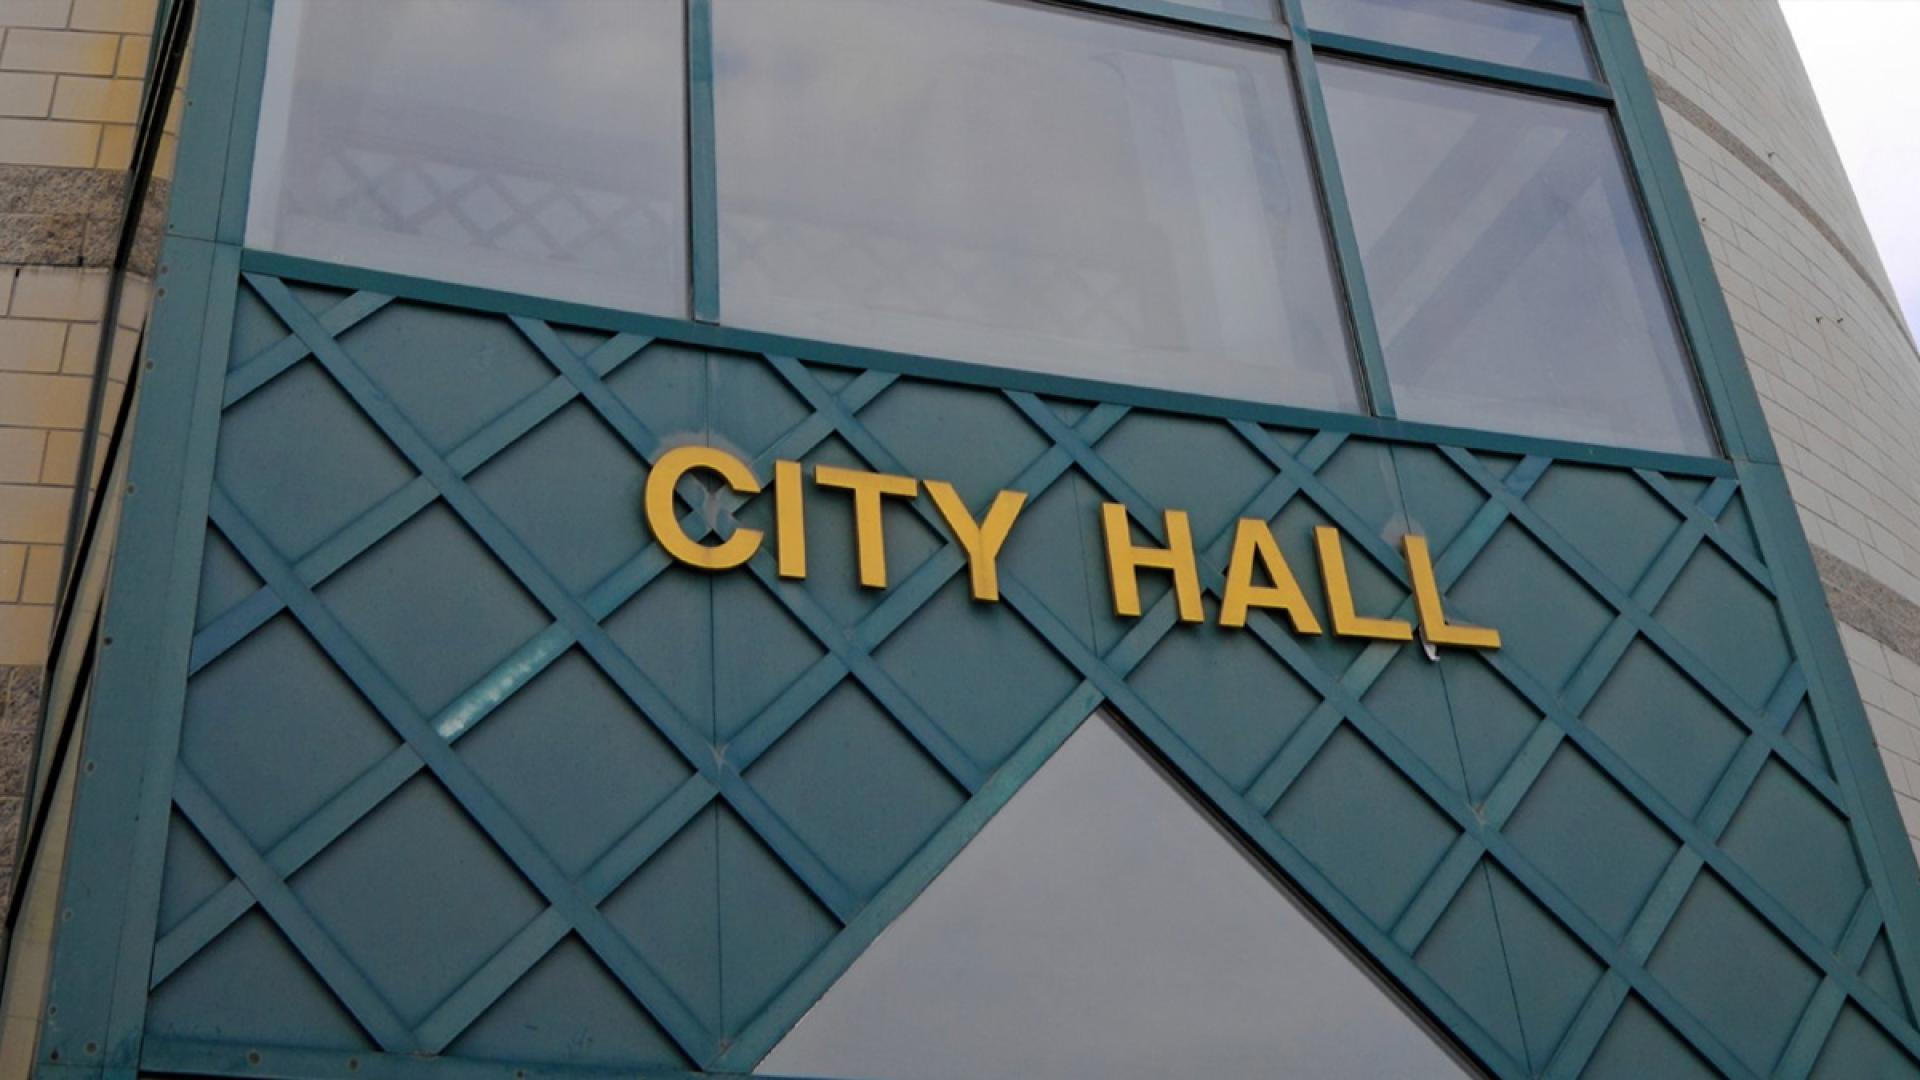 City Hall signage on building